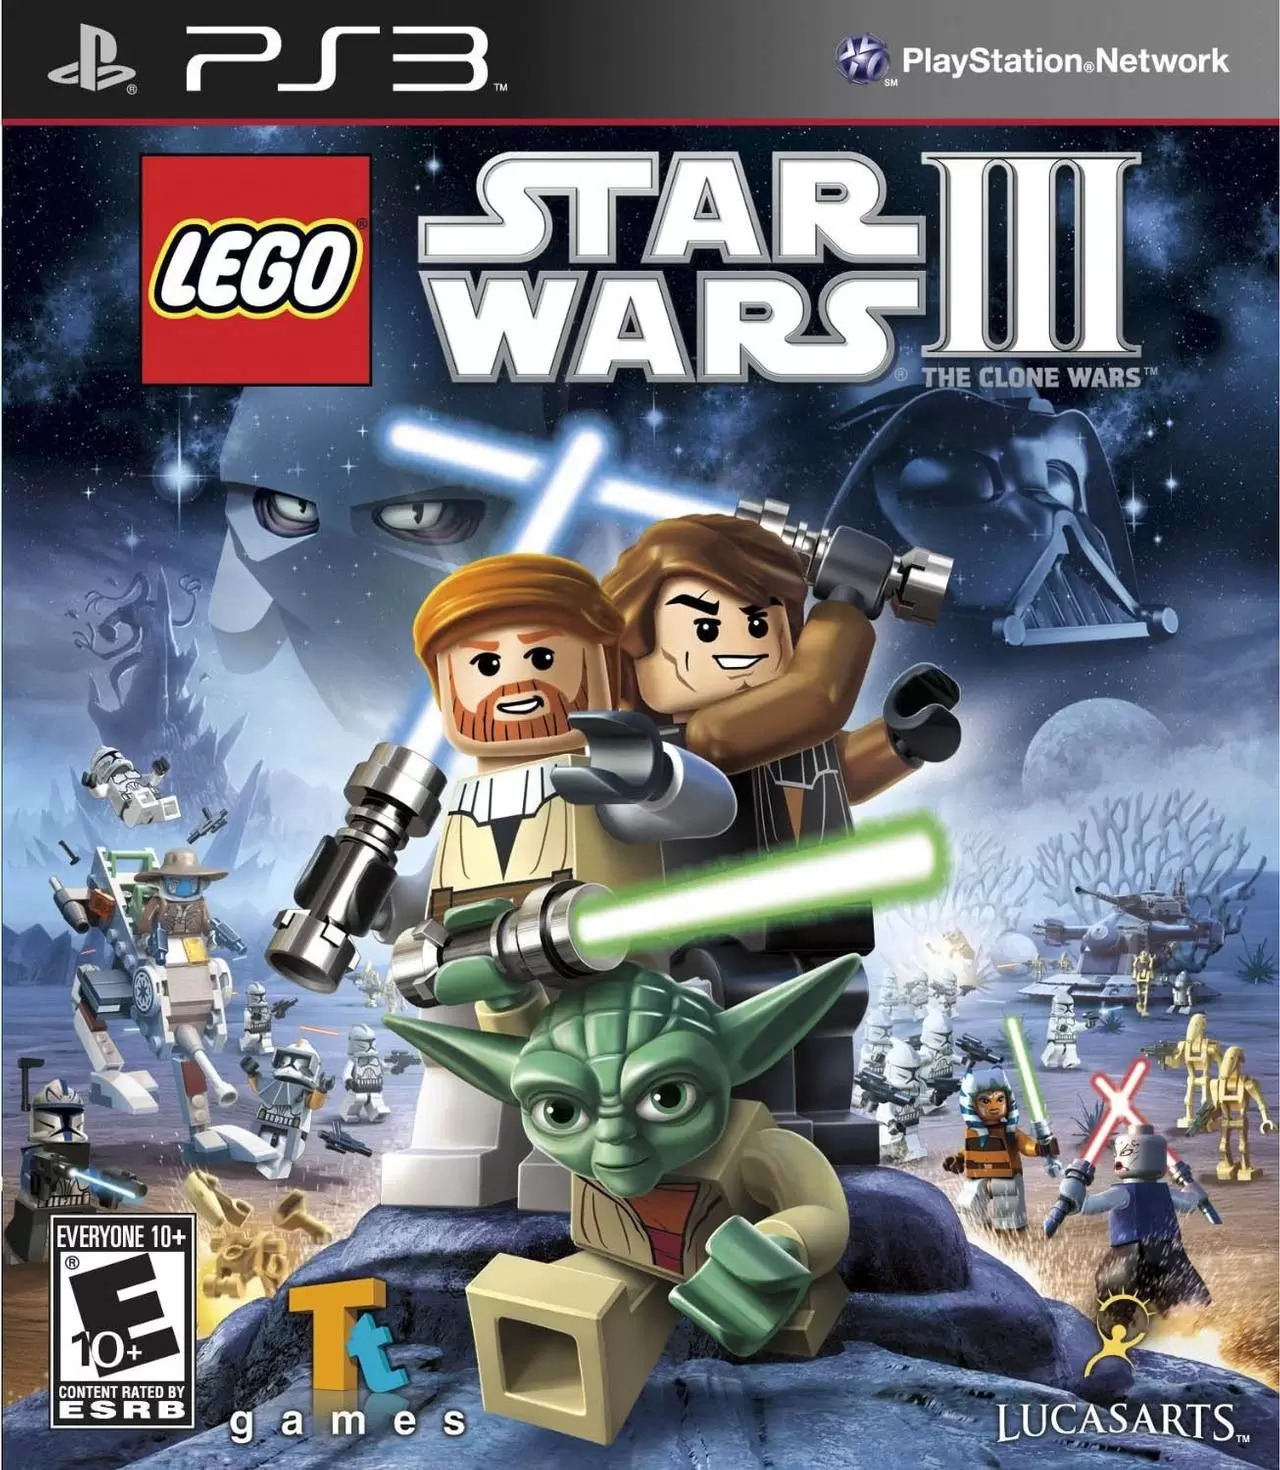 PS3 Games - LEGO Star Wars III: The Clone Wars